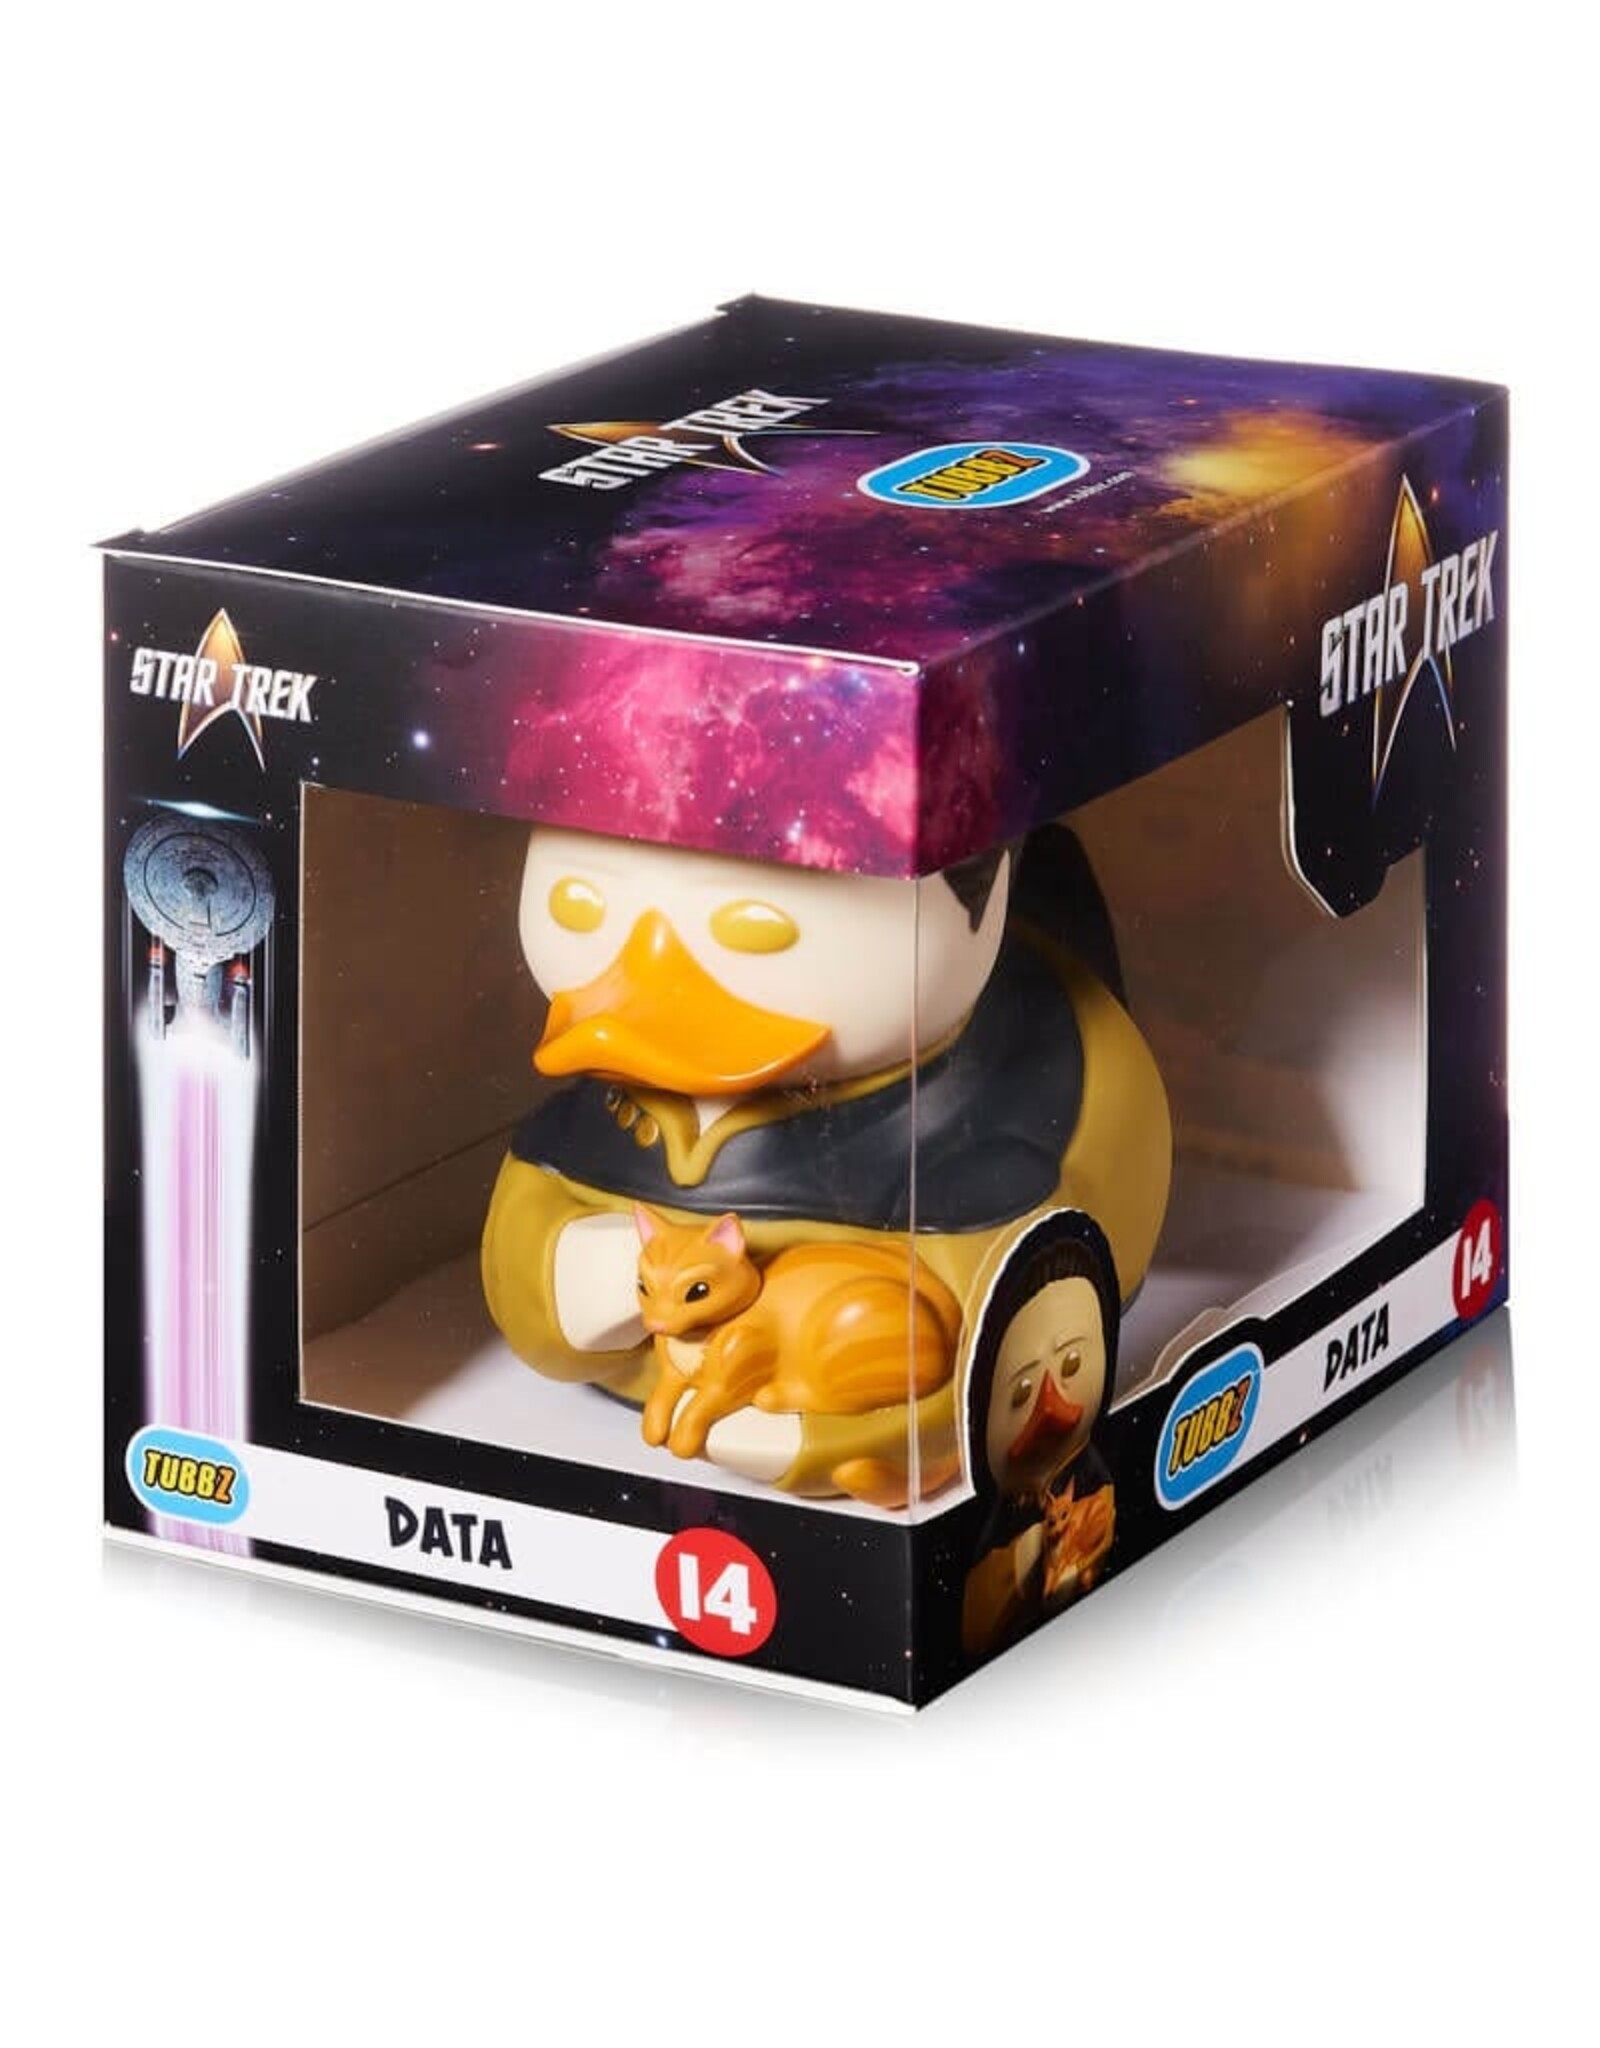 Tubbz Star Trek Data Rubber Duck  - Boxed Edition